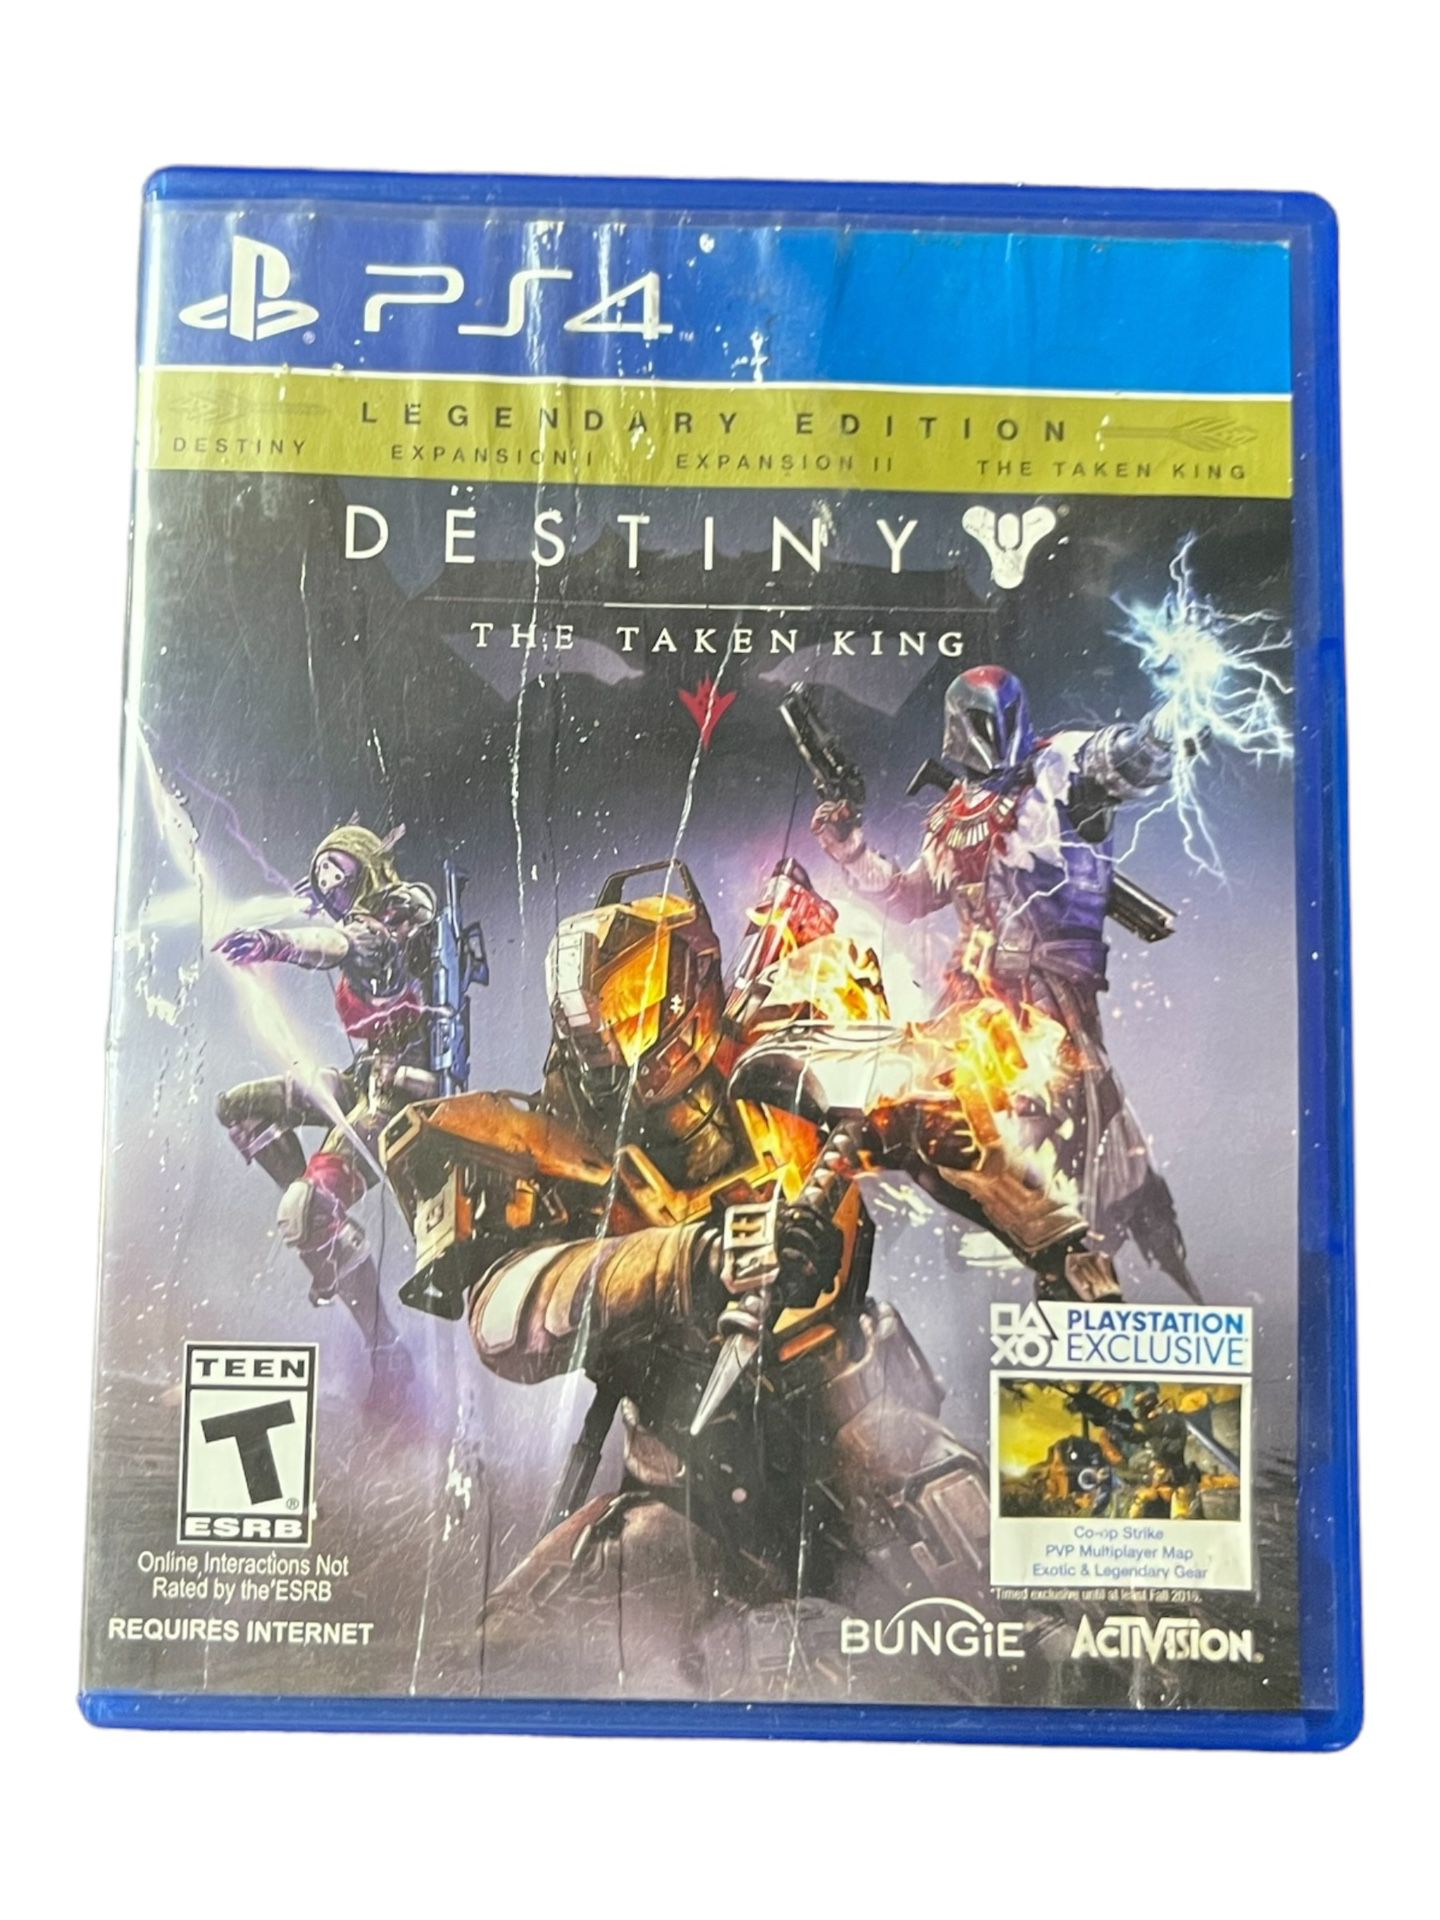 Ps4 - Destiny game